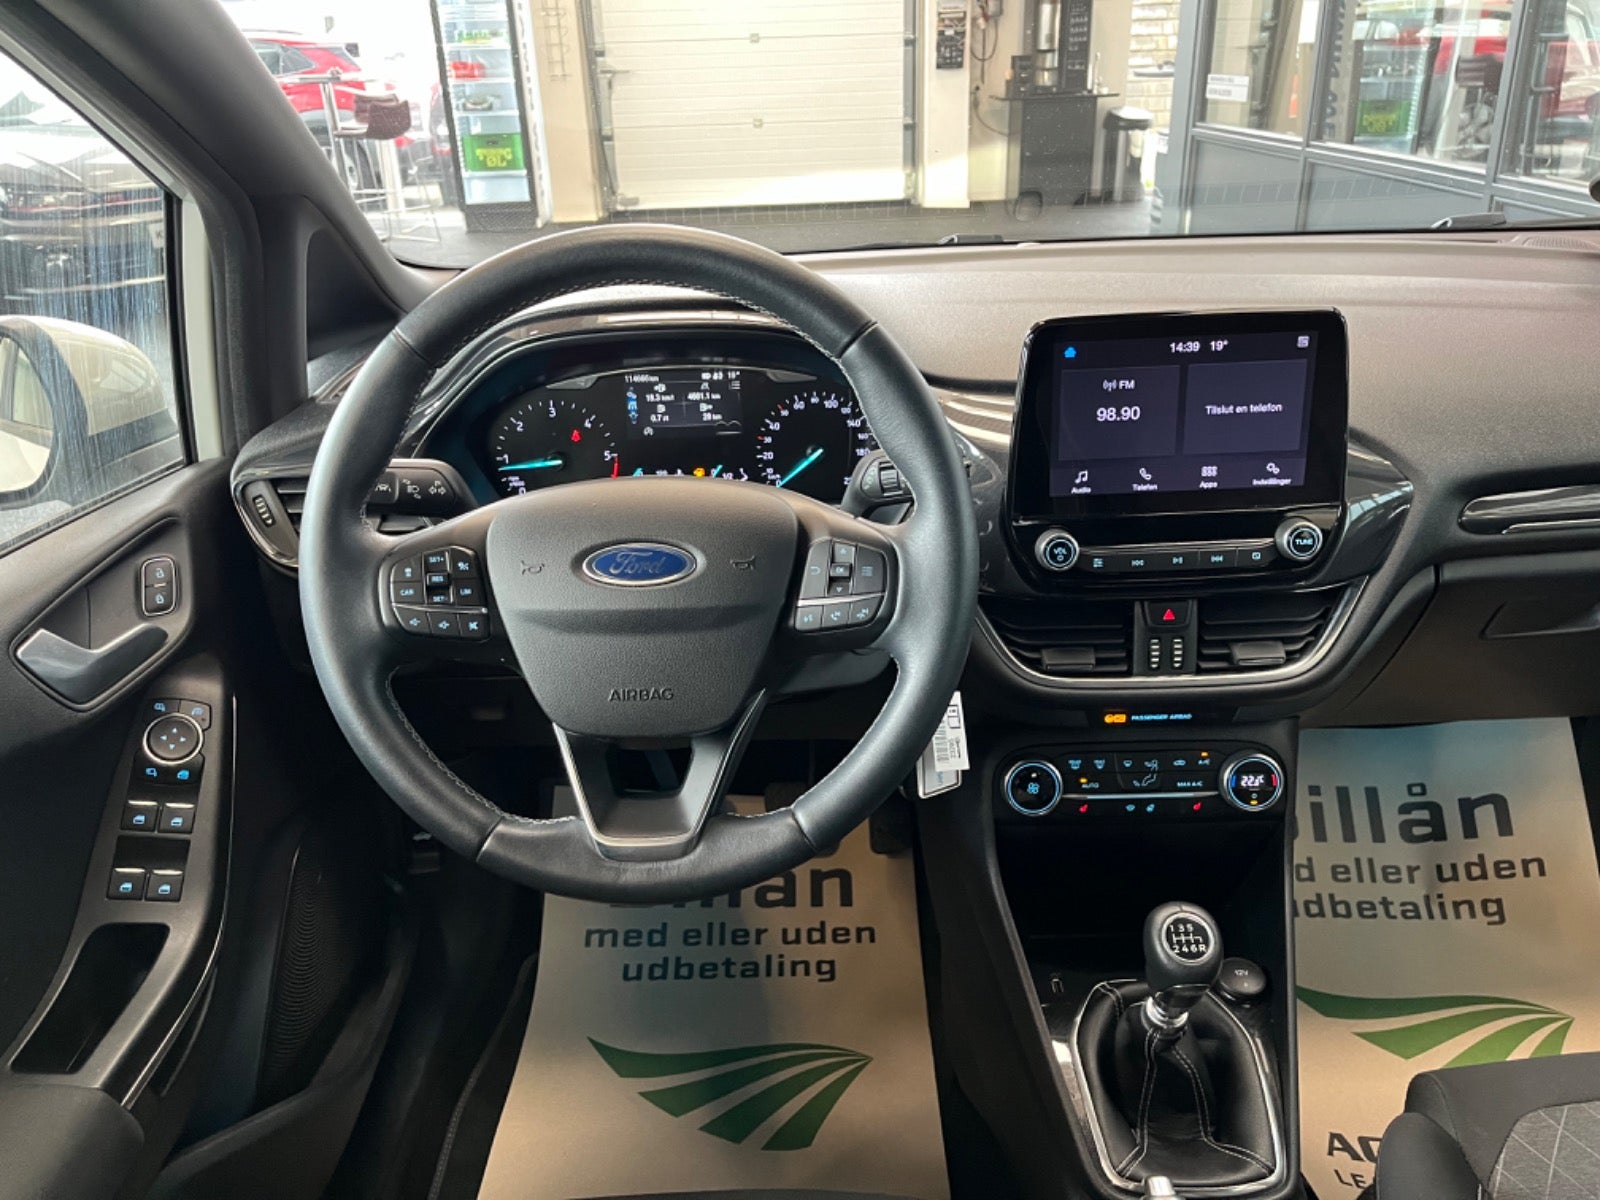 Ford Fiesta 2020